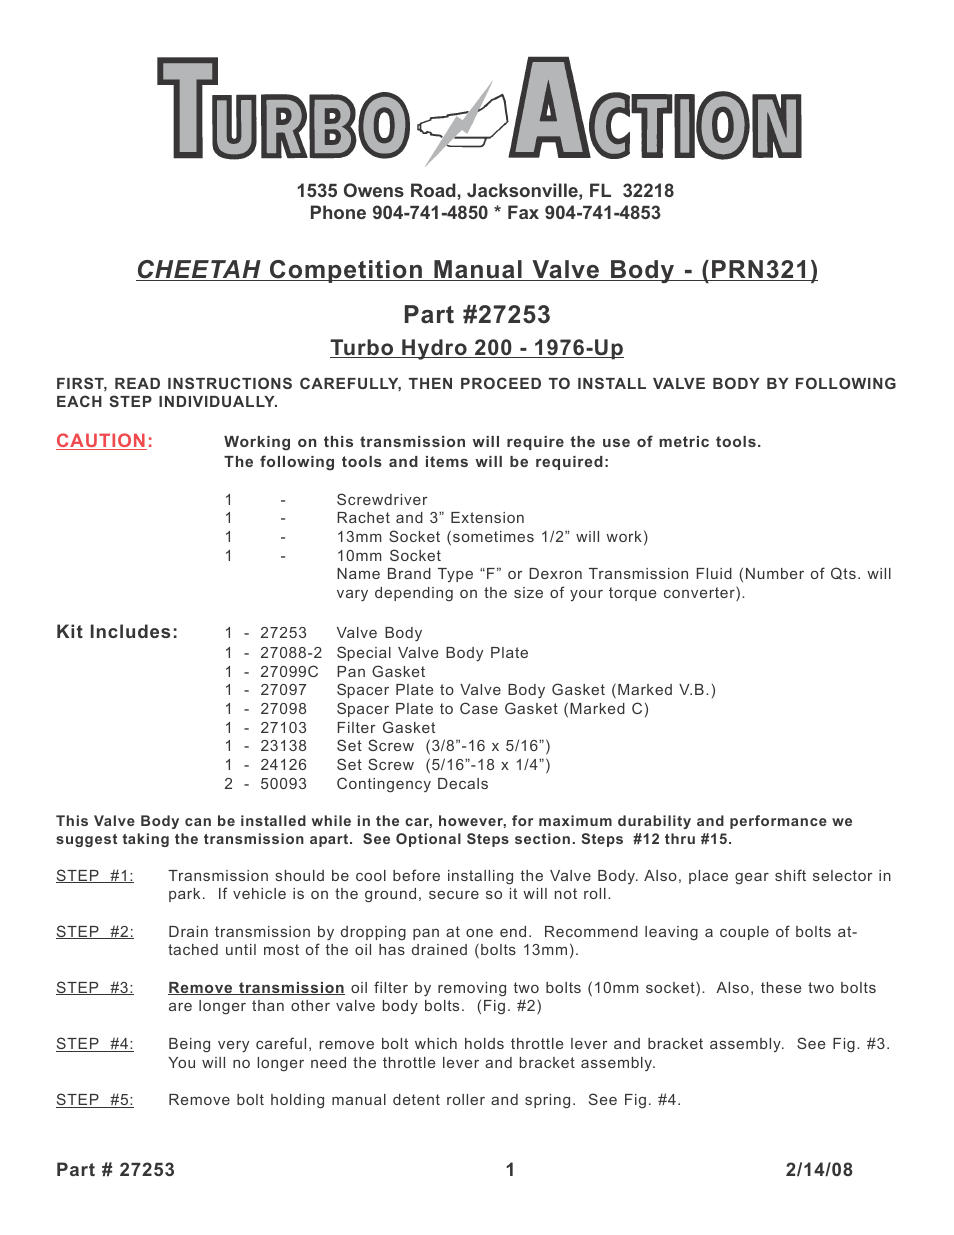 27253 Turbo Hydro 200 Manual Valve Body (PRN321)